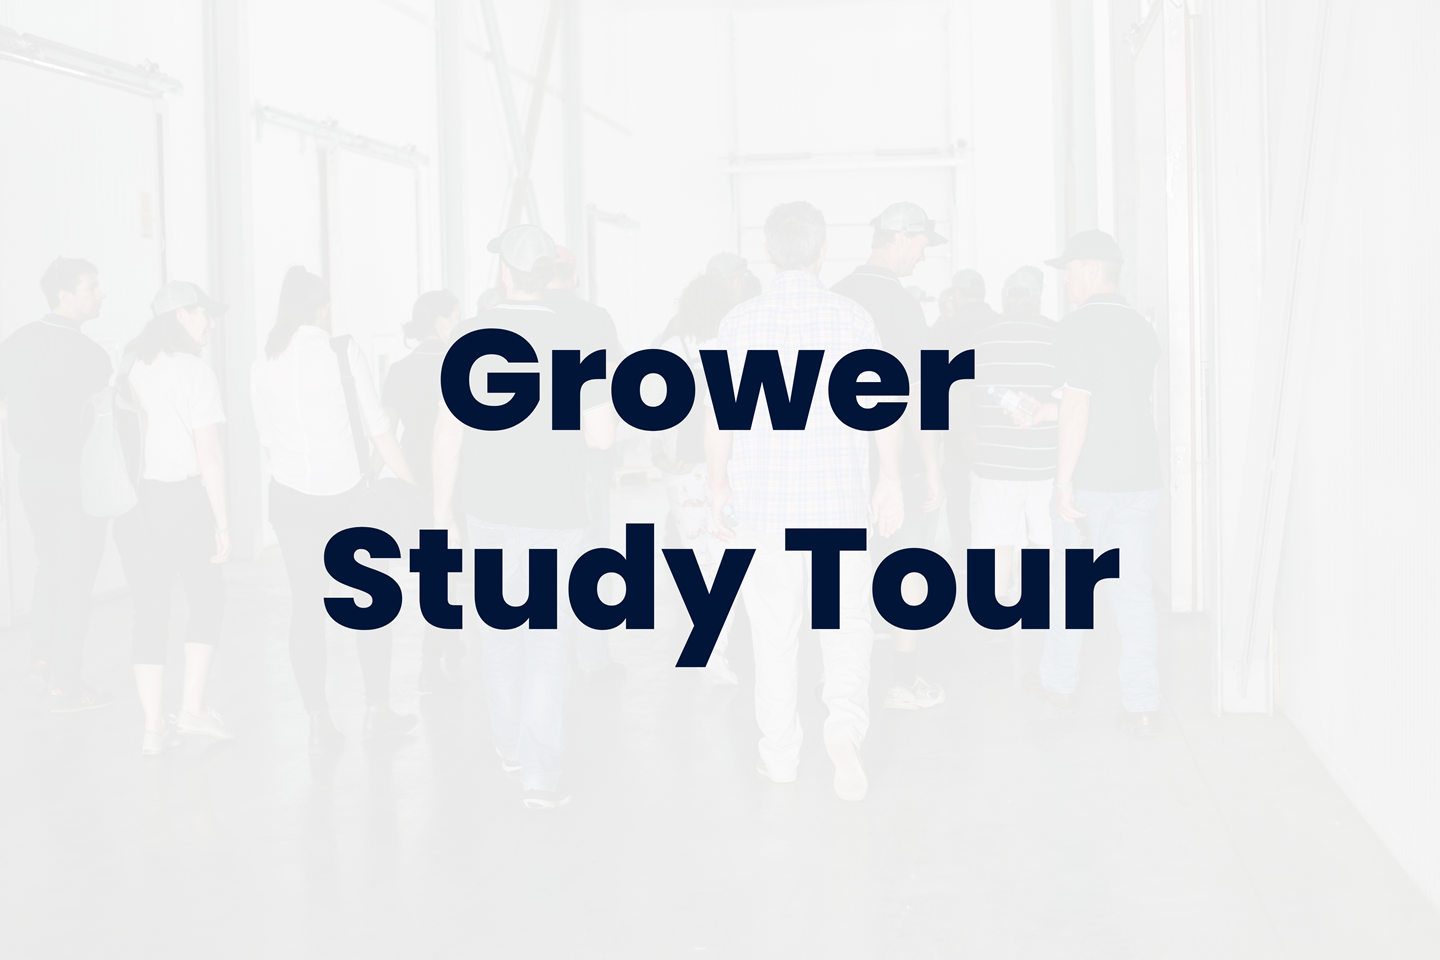 Grower Study Tour text